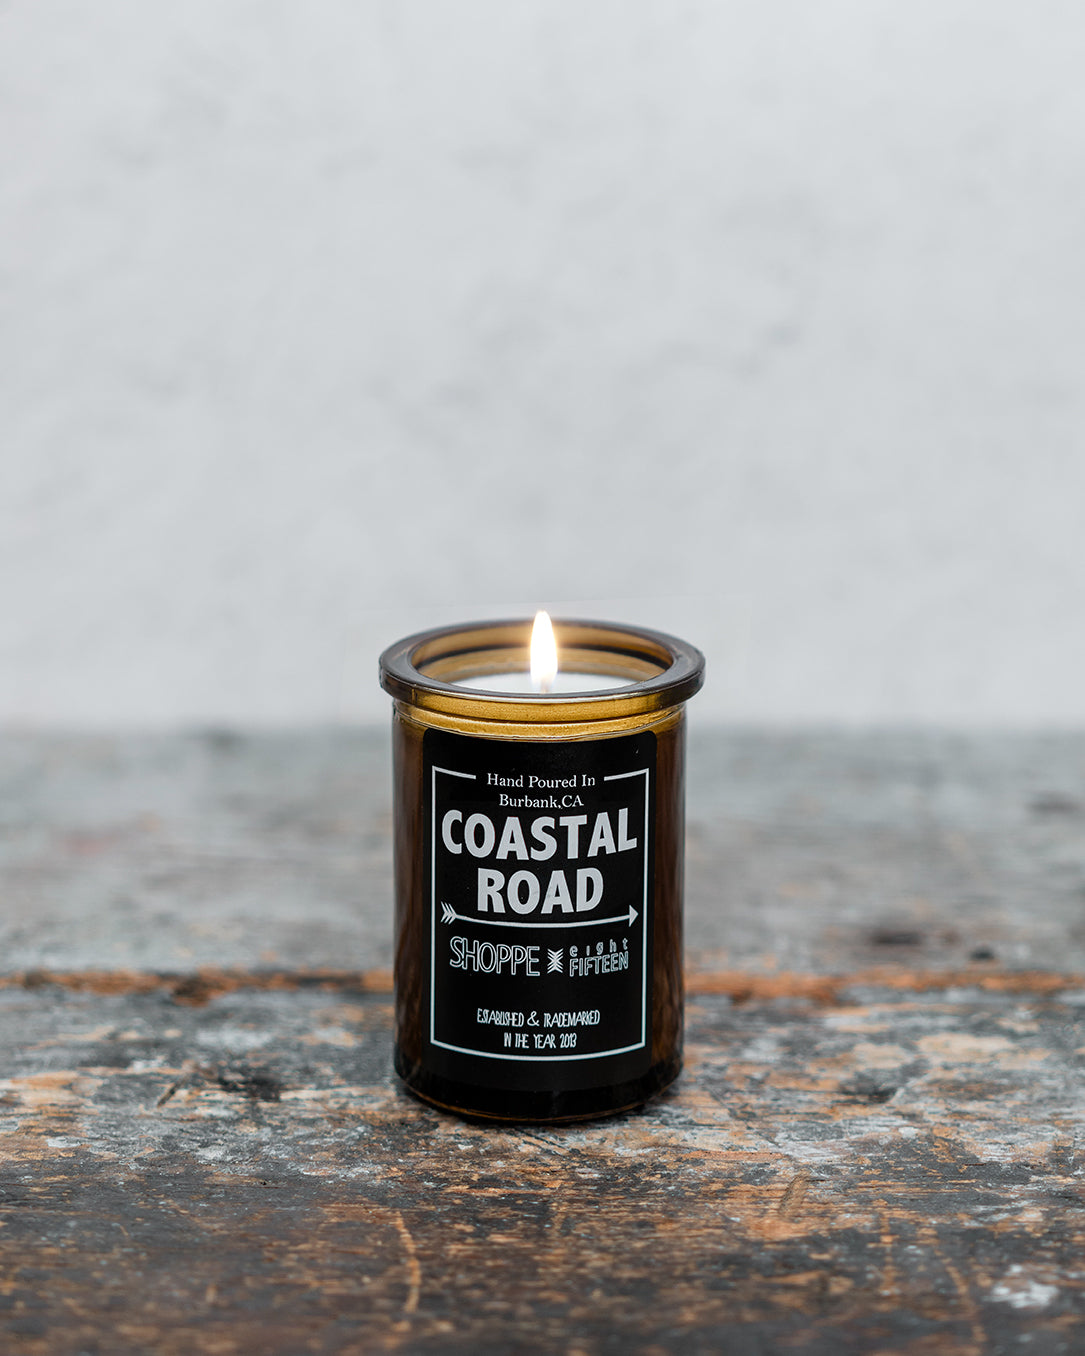 Lit Coastal Road amber glass candle on wooden shelf